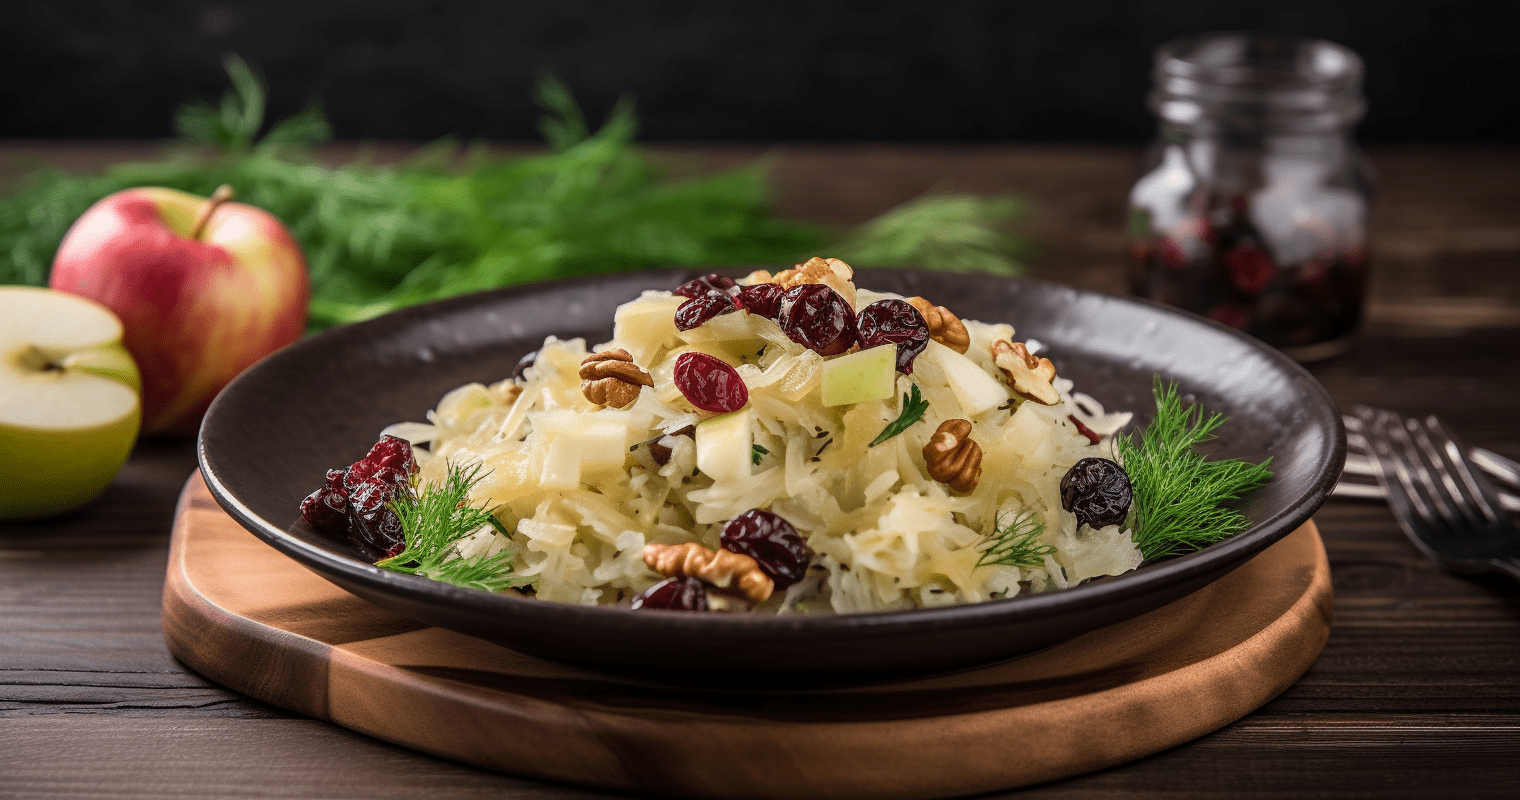 Sauerkraut Salad Cooking Instructions